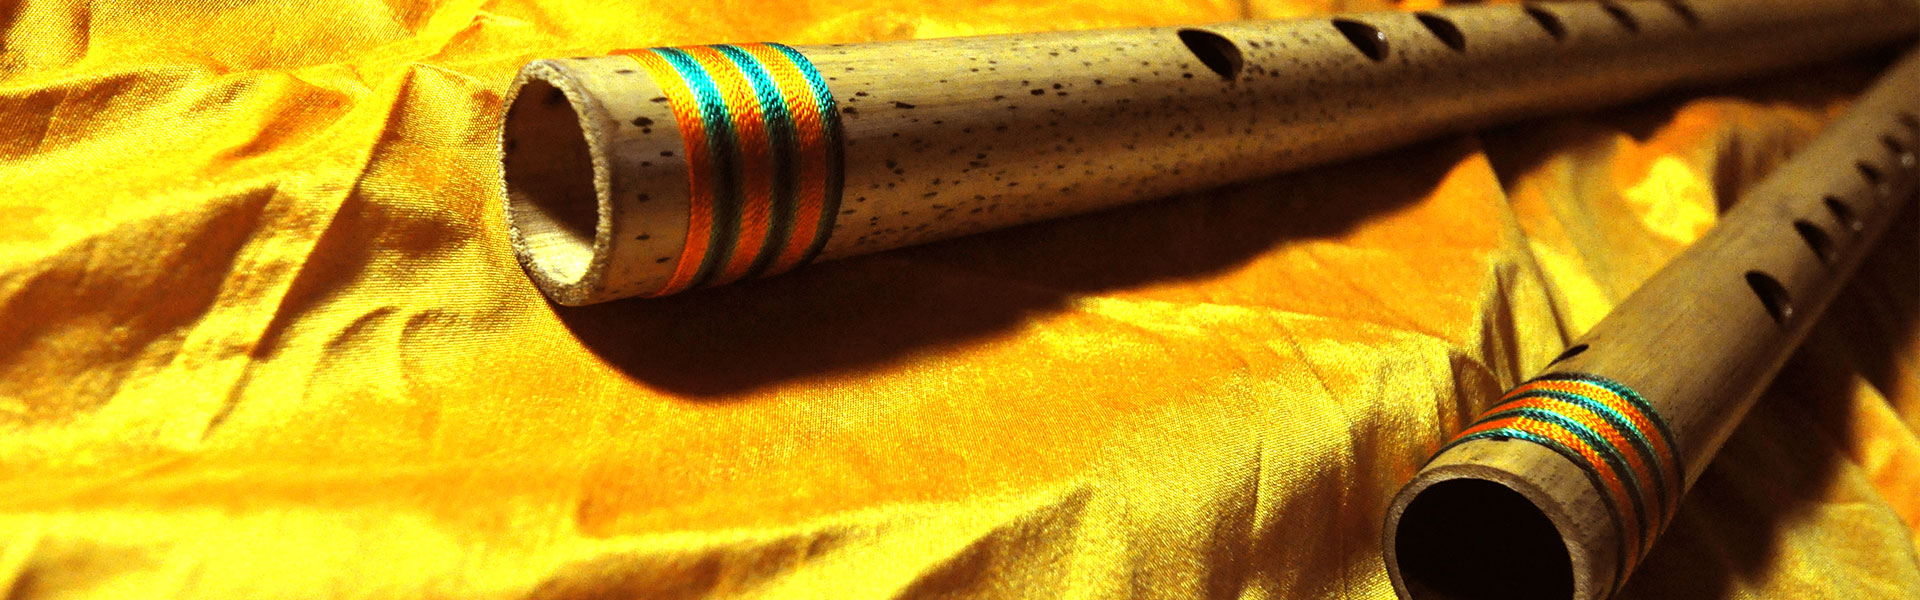 Corso di flauto indiano Bansuri - Laboratorio Armonico Akashica